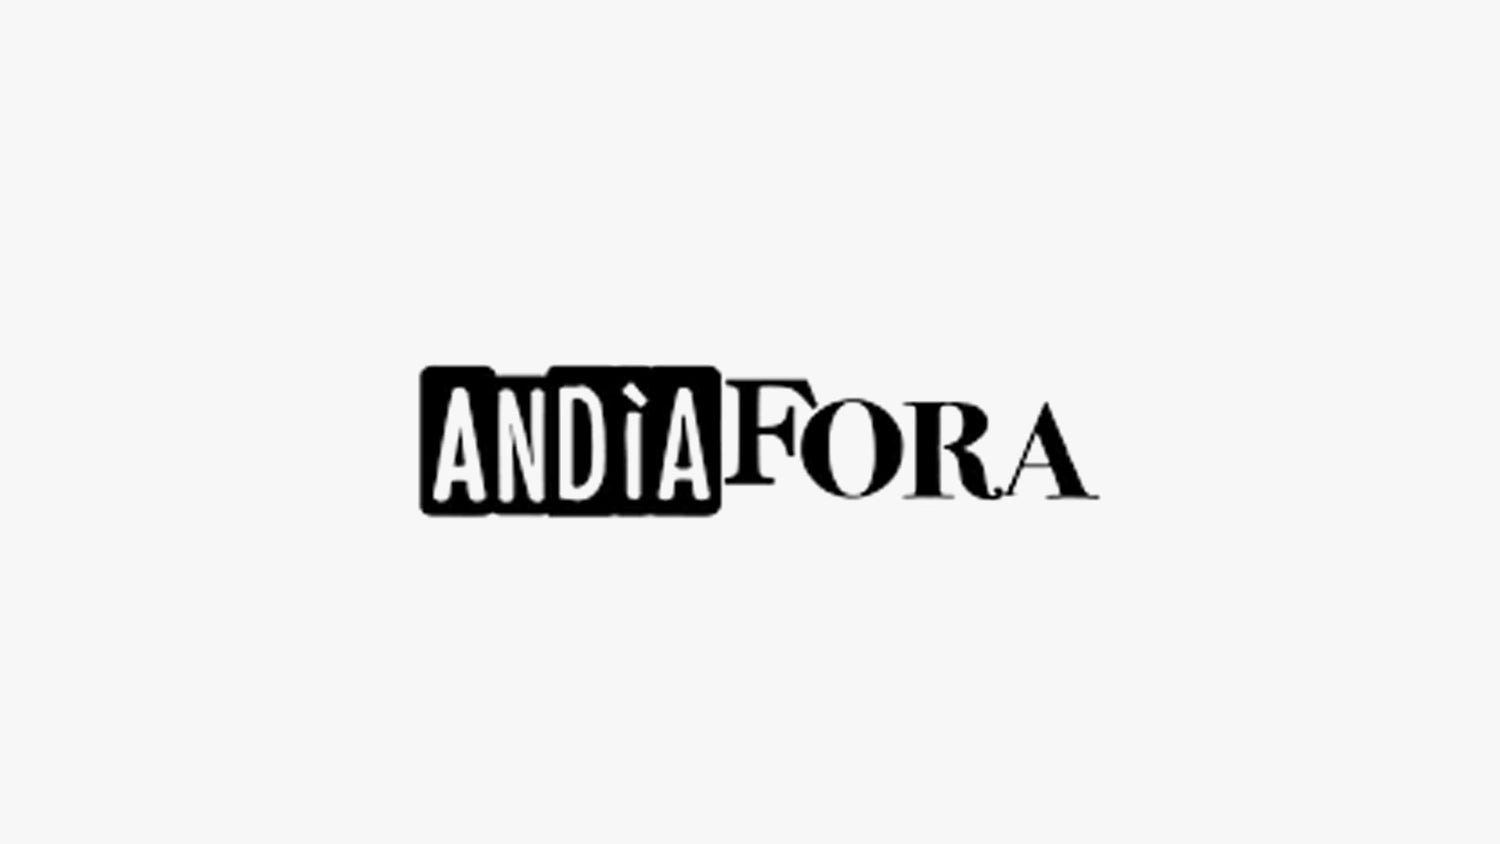 Andia Fora